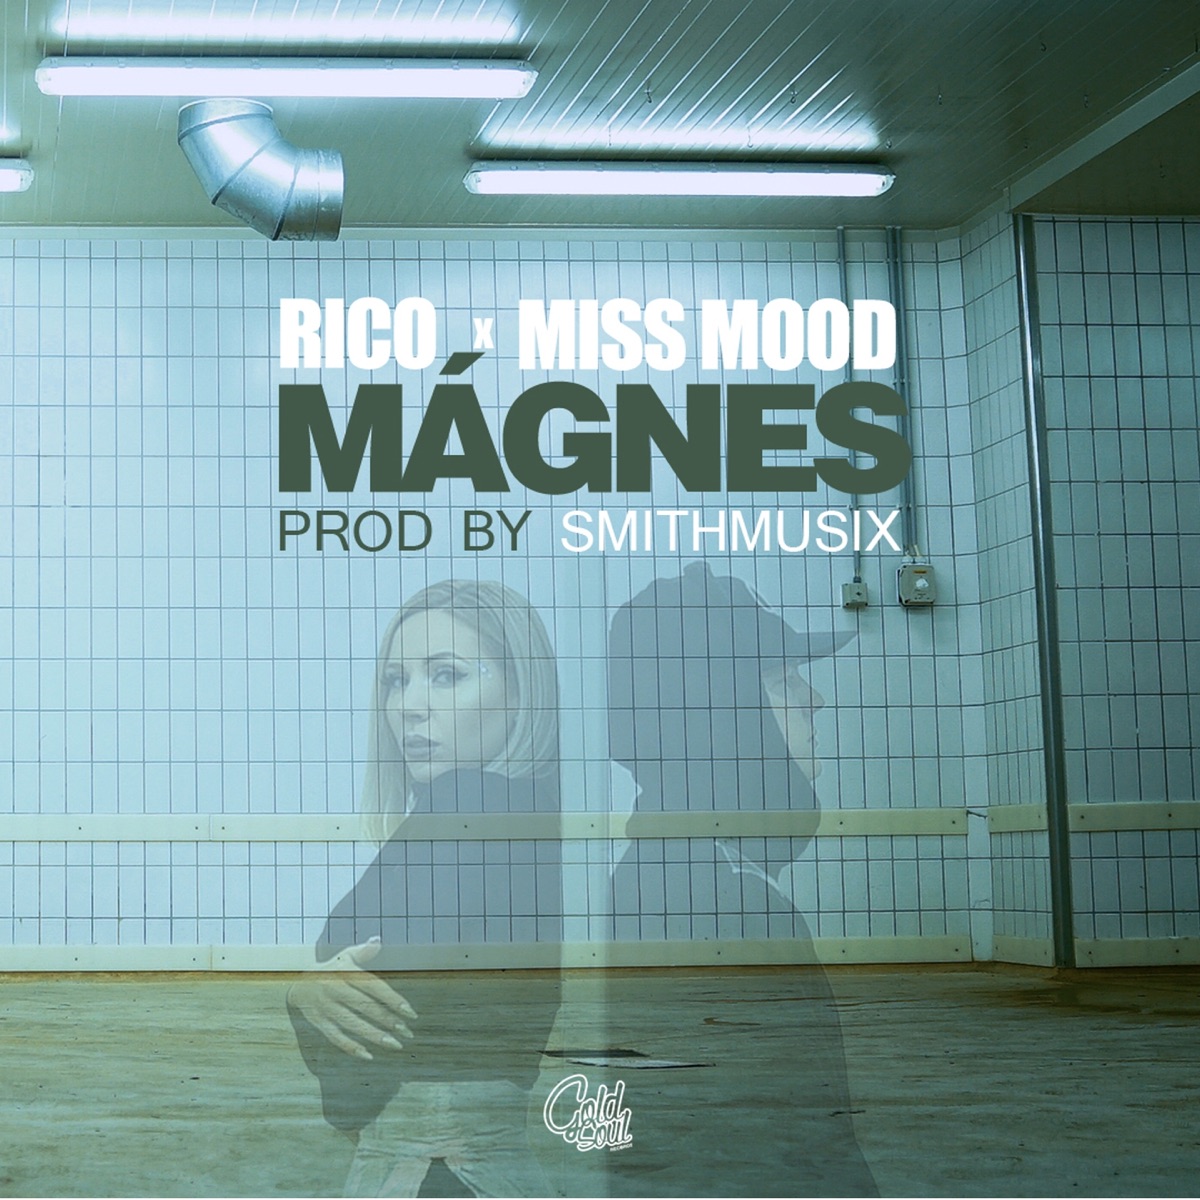 Mágnes - Single - Album by Rico & Miss Mood - Apple Music